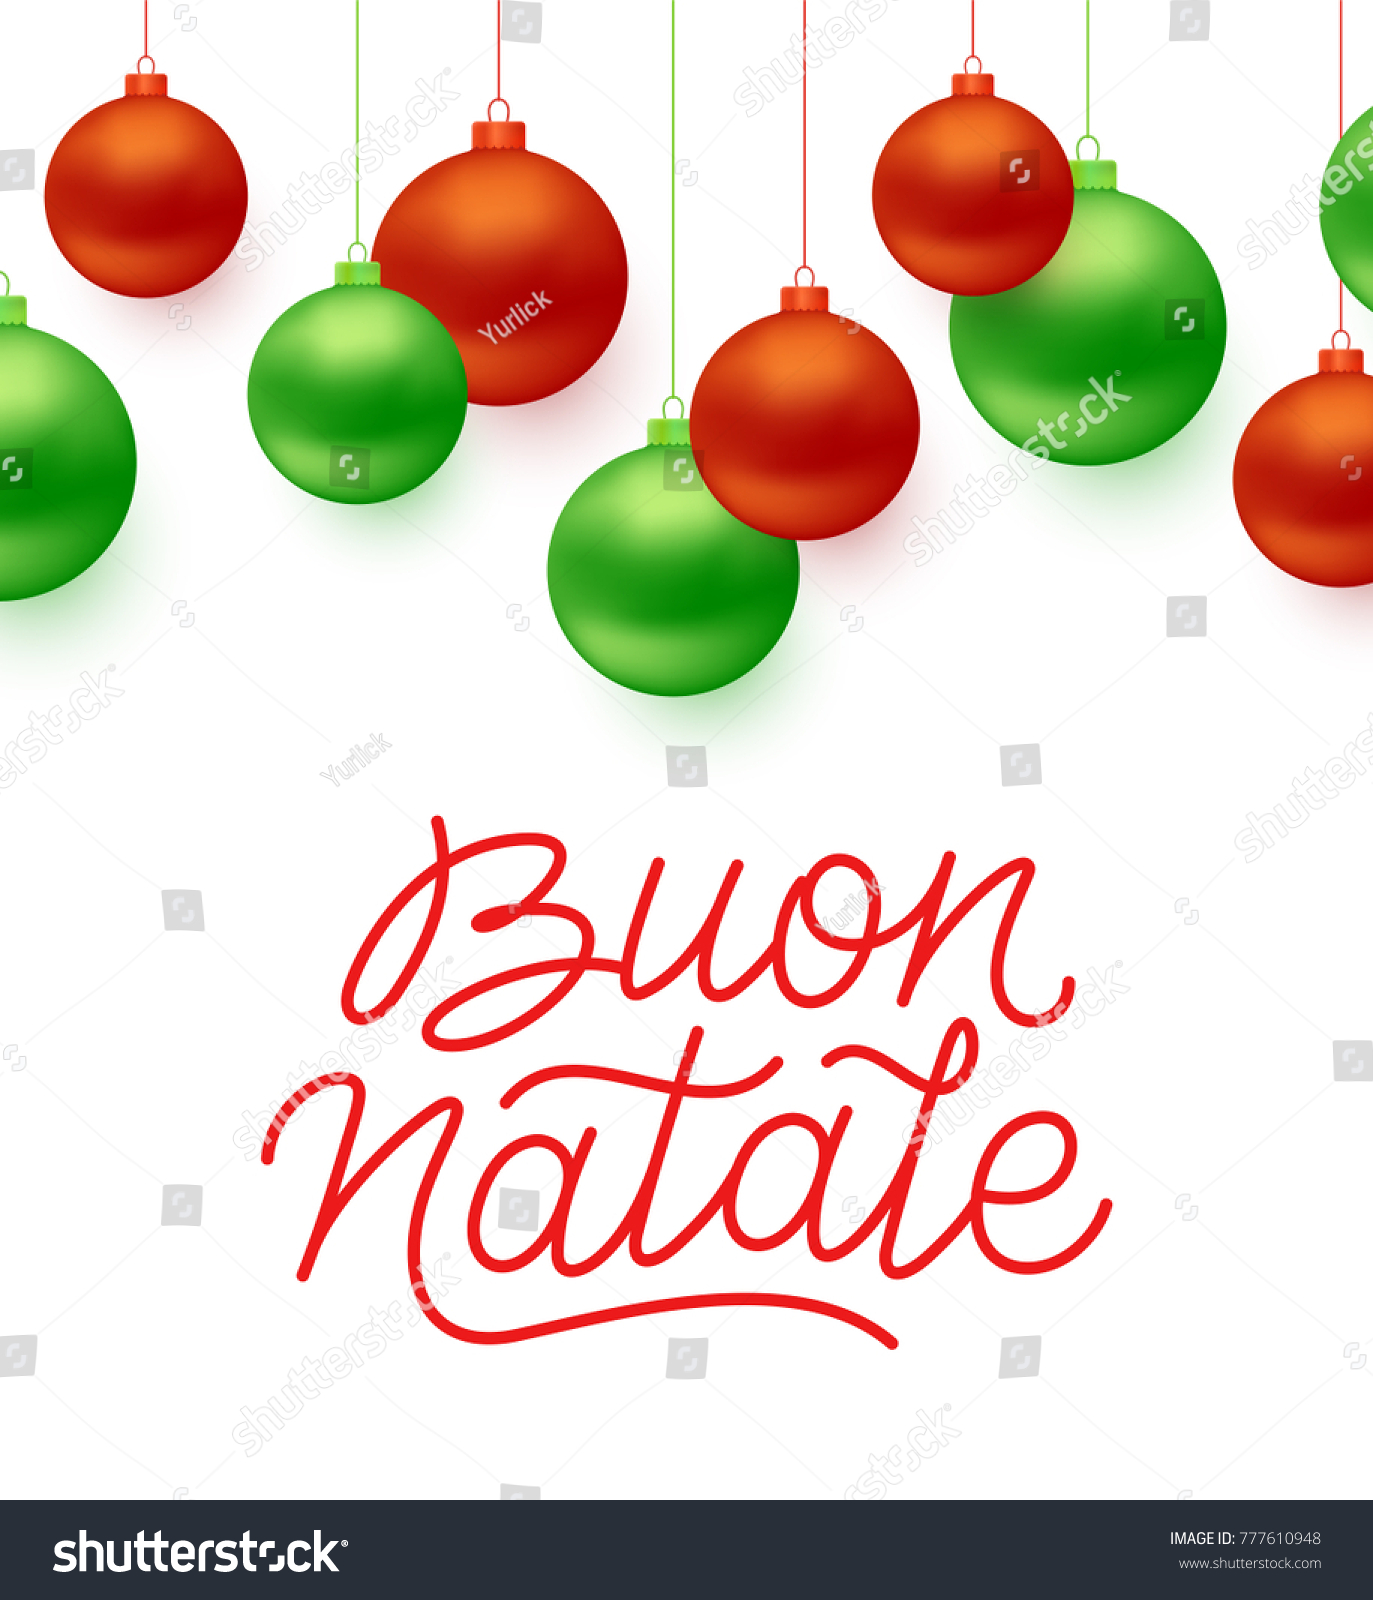 Clip Buon Natale.Buon Natale Italian Merry Christmas Typographic Stock Vector Royalty Free 777610948